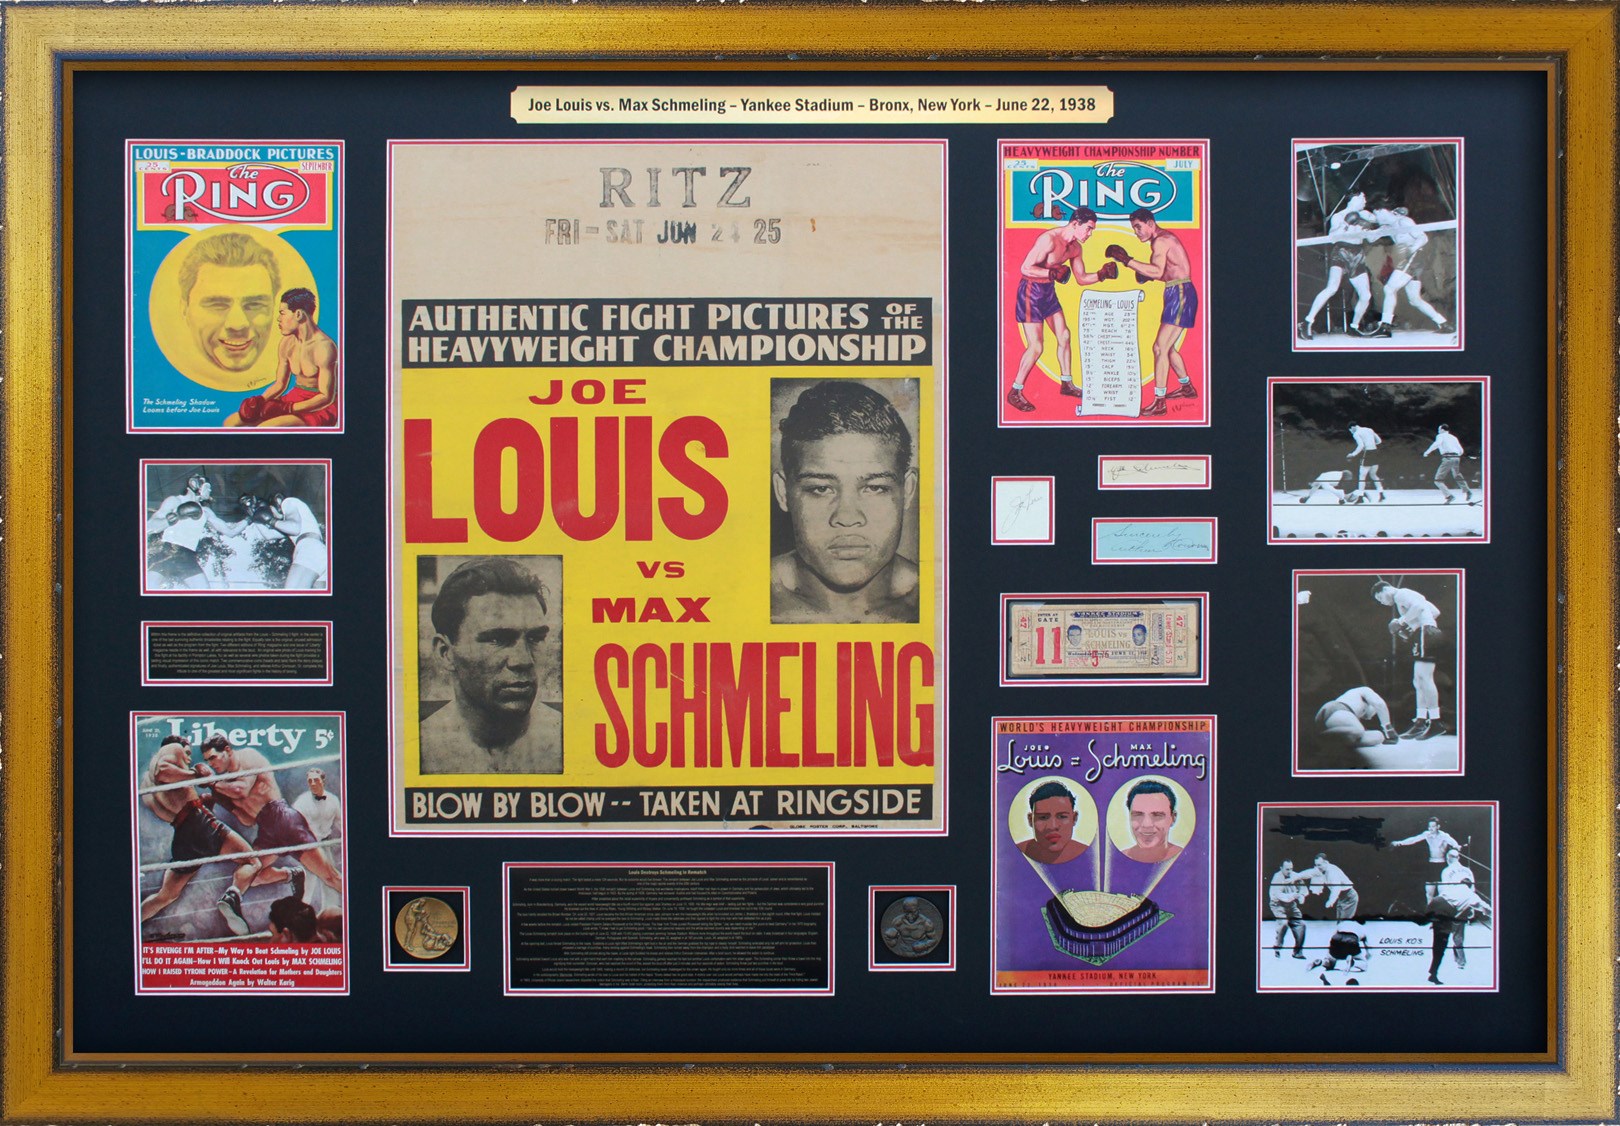 1938 Joe Louis vs. Max Schmeling II - Complete with Autographs, Ticket, Program & Broadside